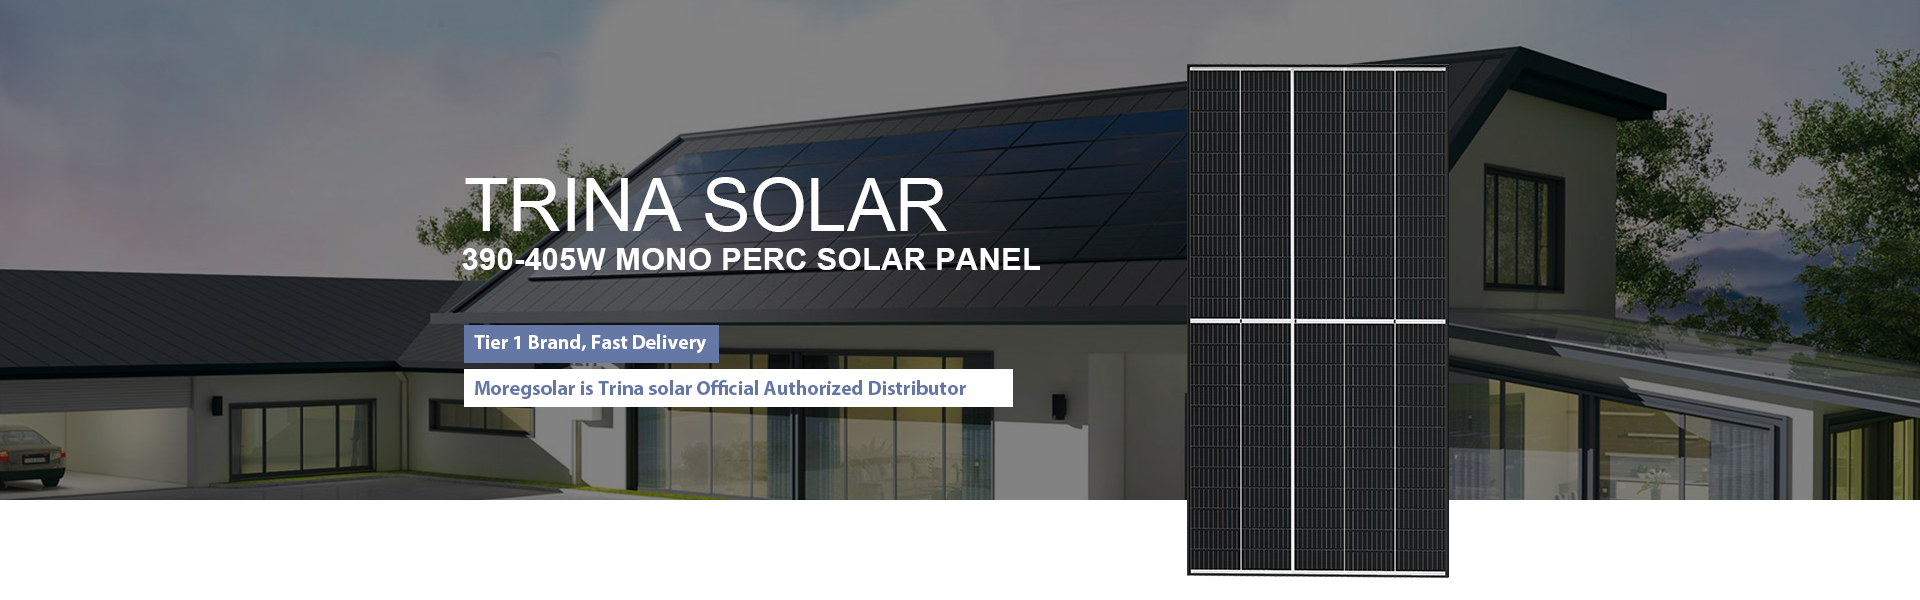 Trina solar vertex S panel 400w 405w pv panels price